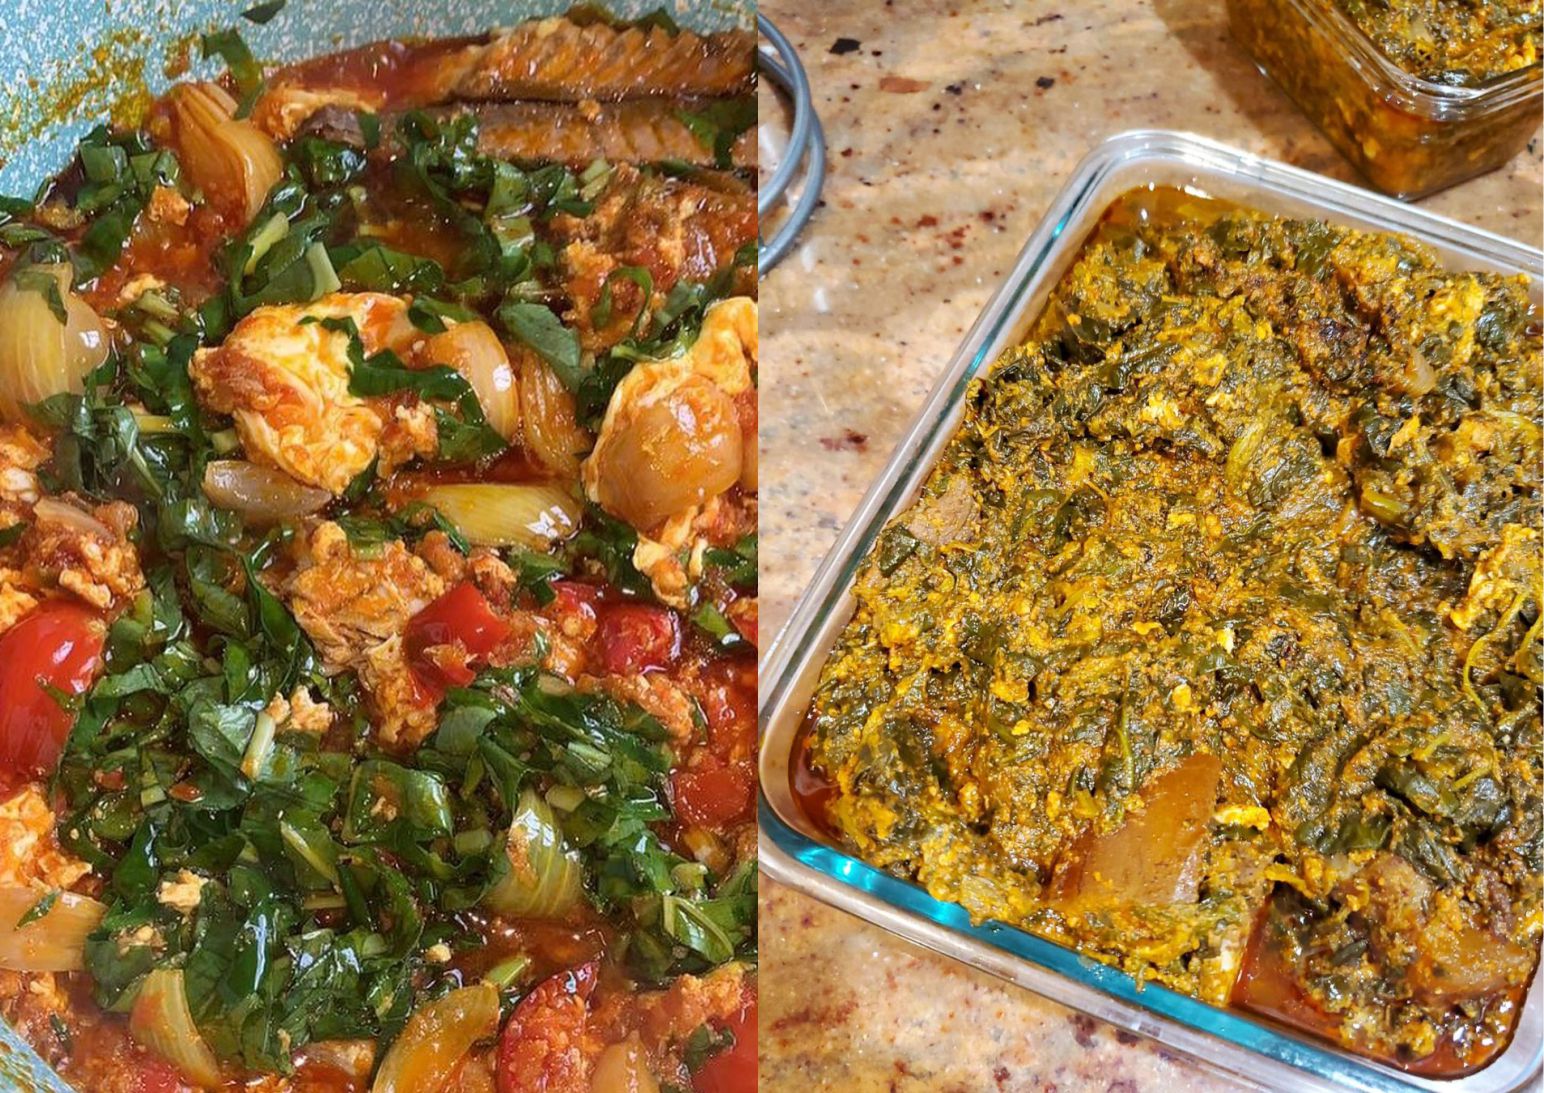 Here is how to prepare Kontomire stew in Ghana: simple, yummy recipe